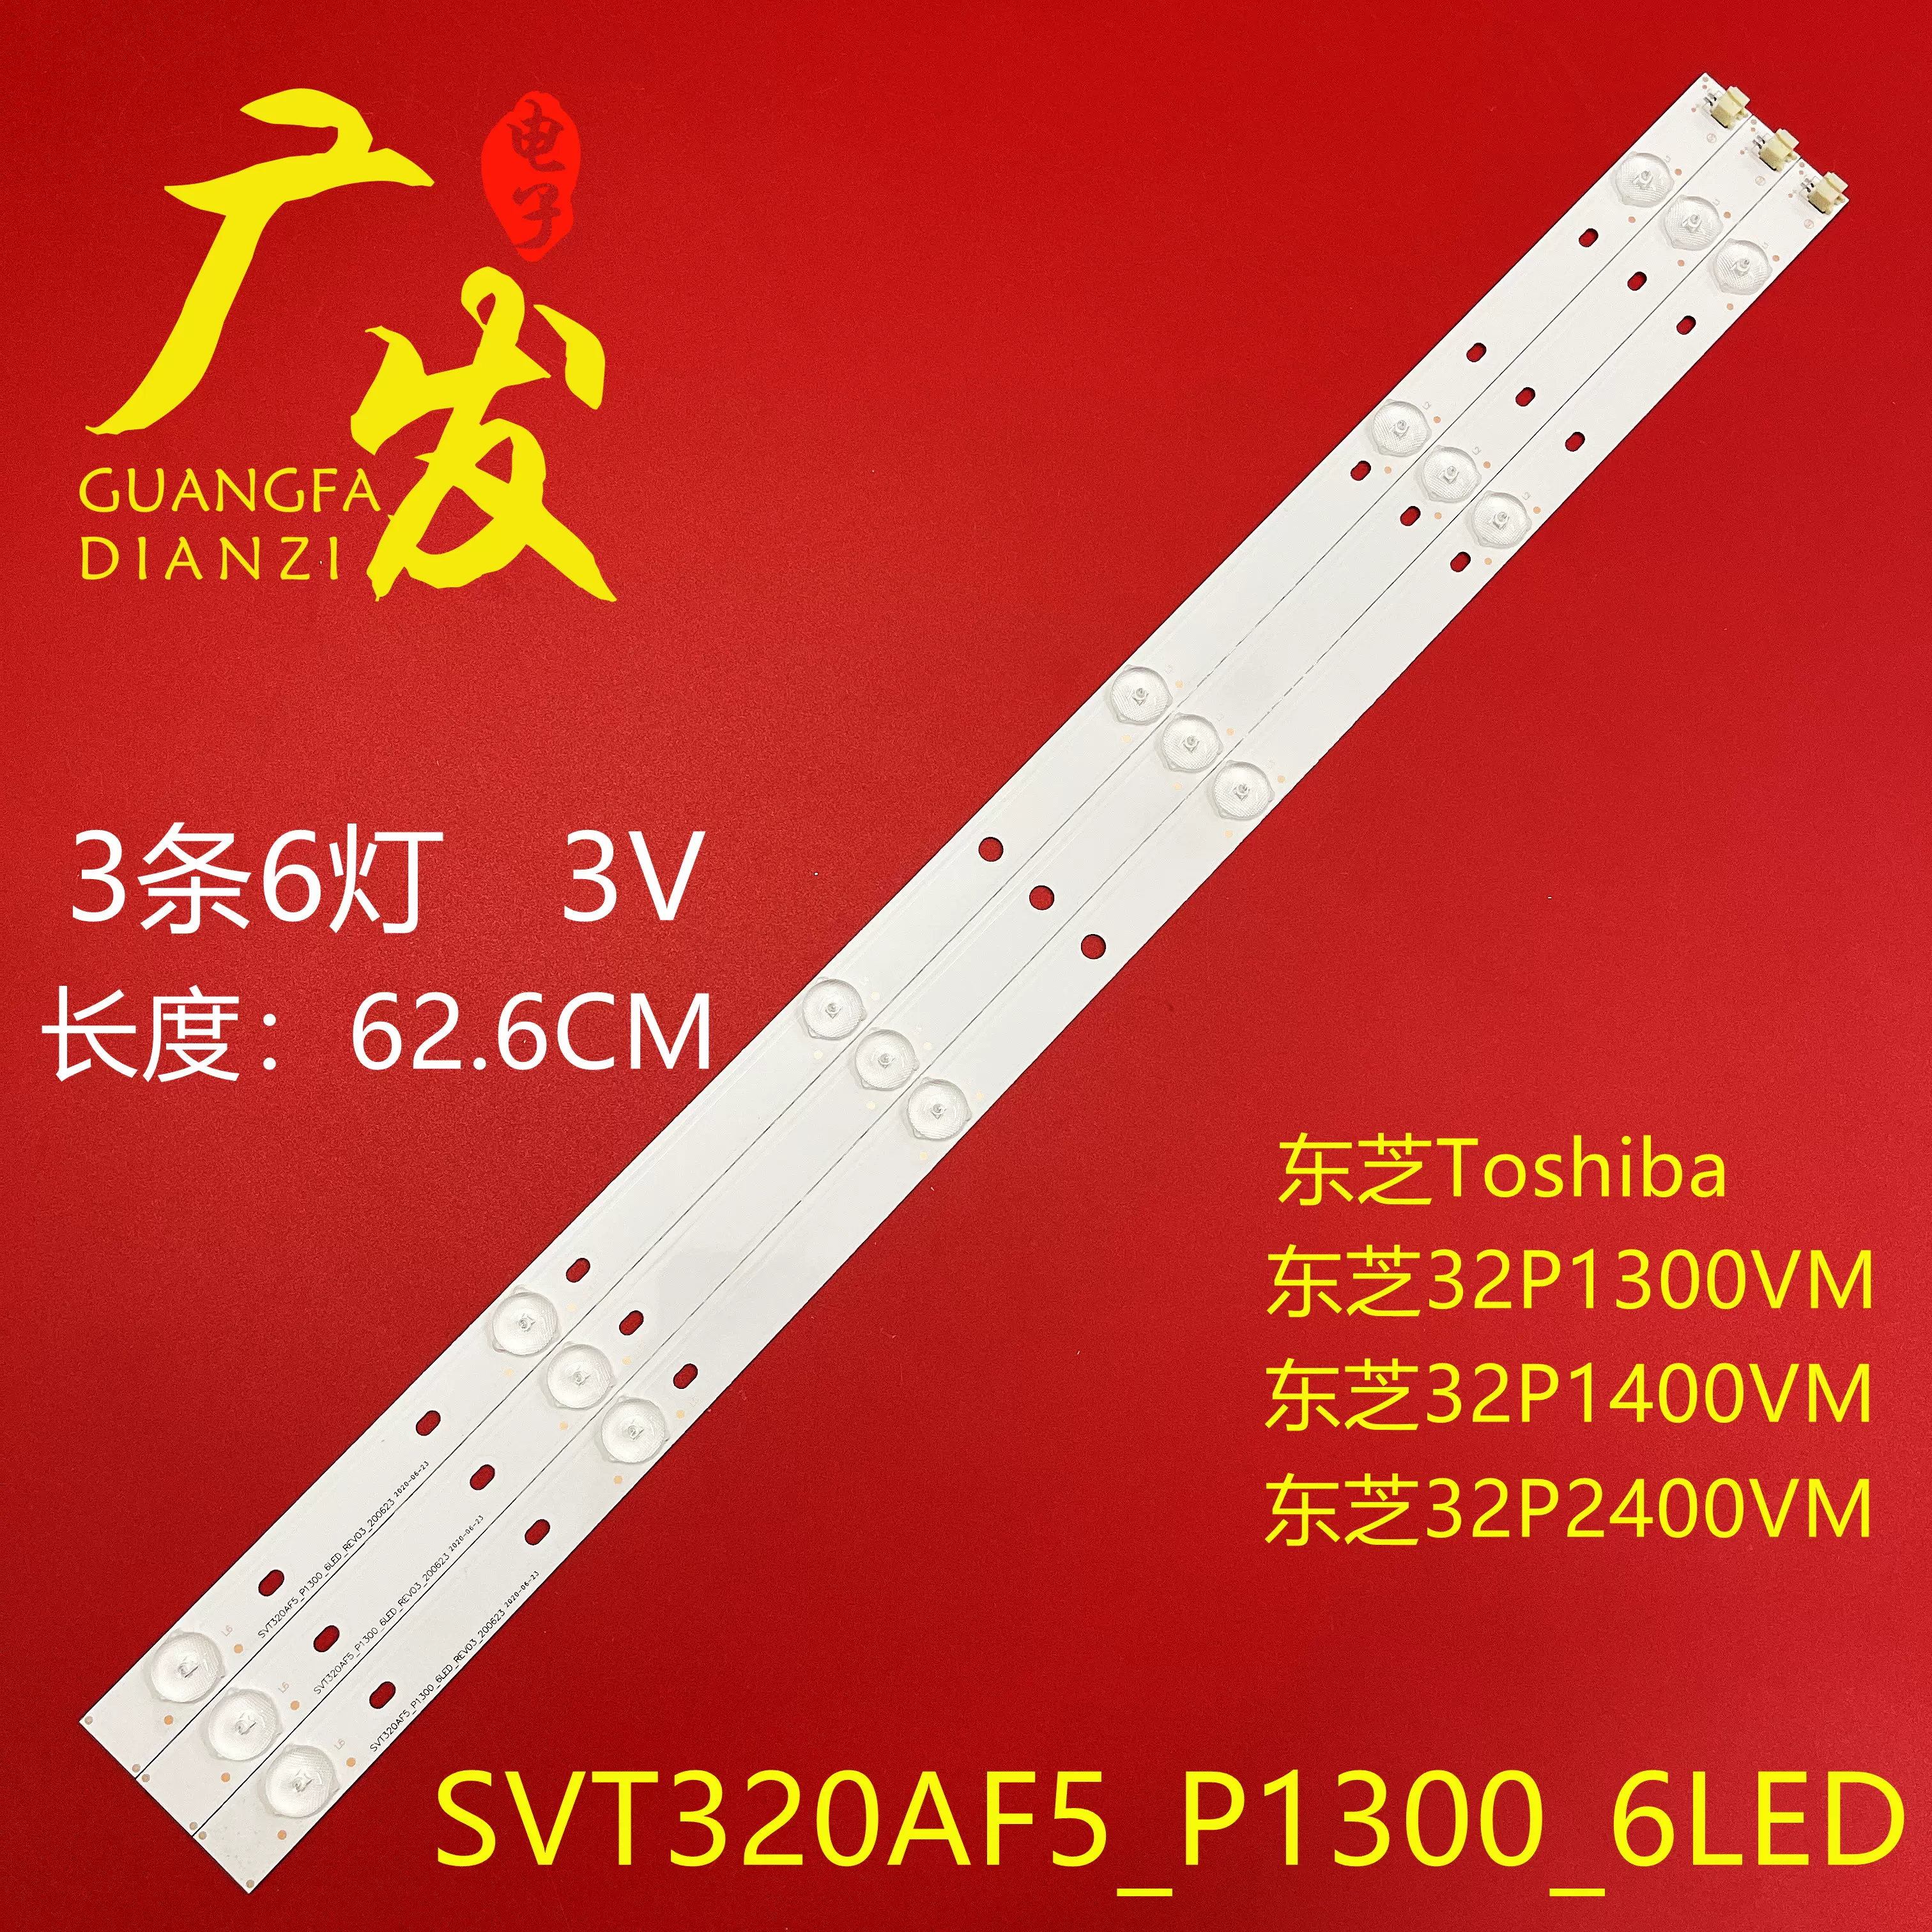 适用SHAASUNG 43N6灯条MG-43D3006V10C1B82410M-HX背光灯电视机-Taobao